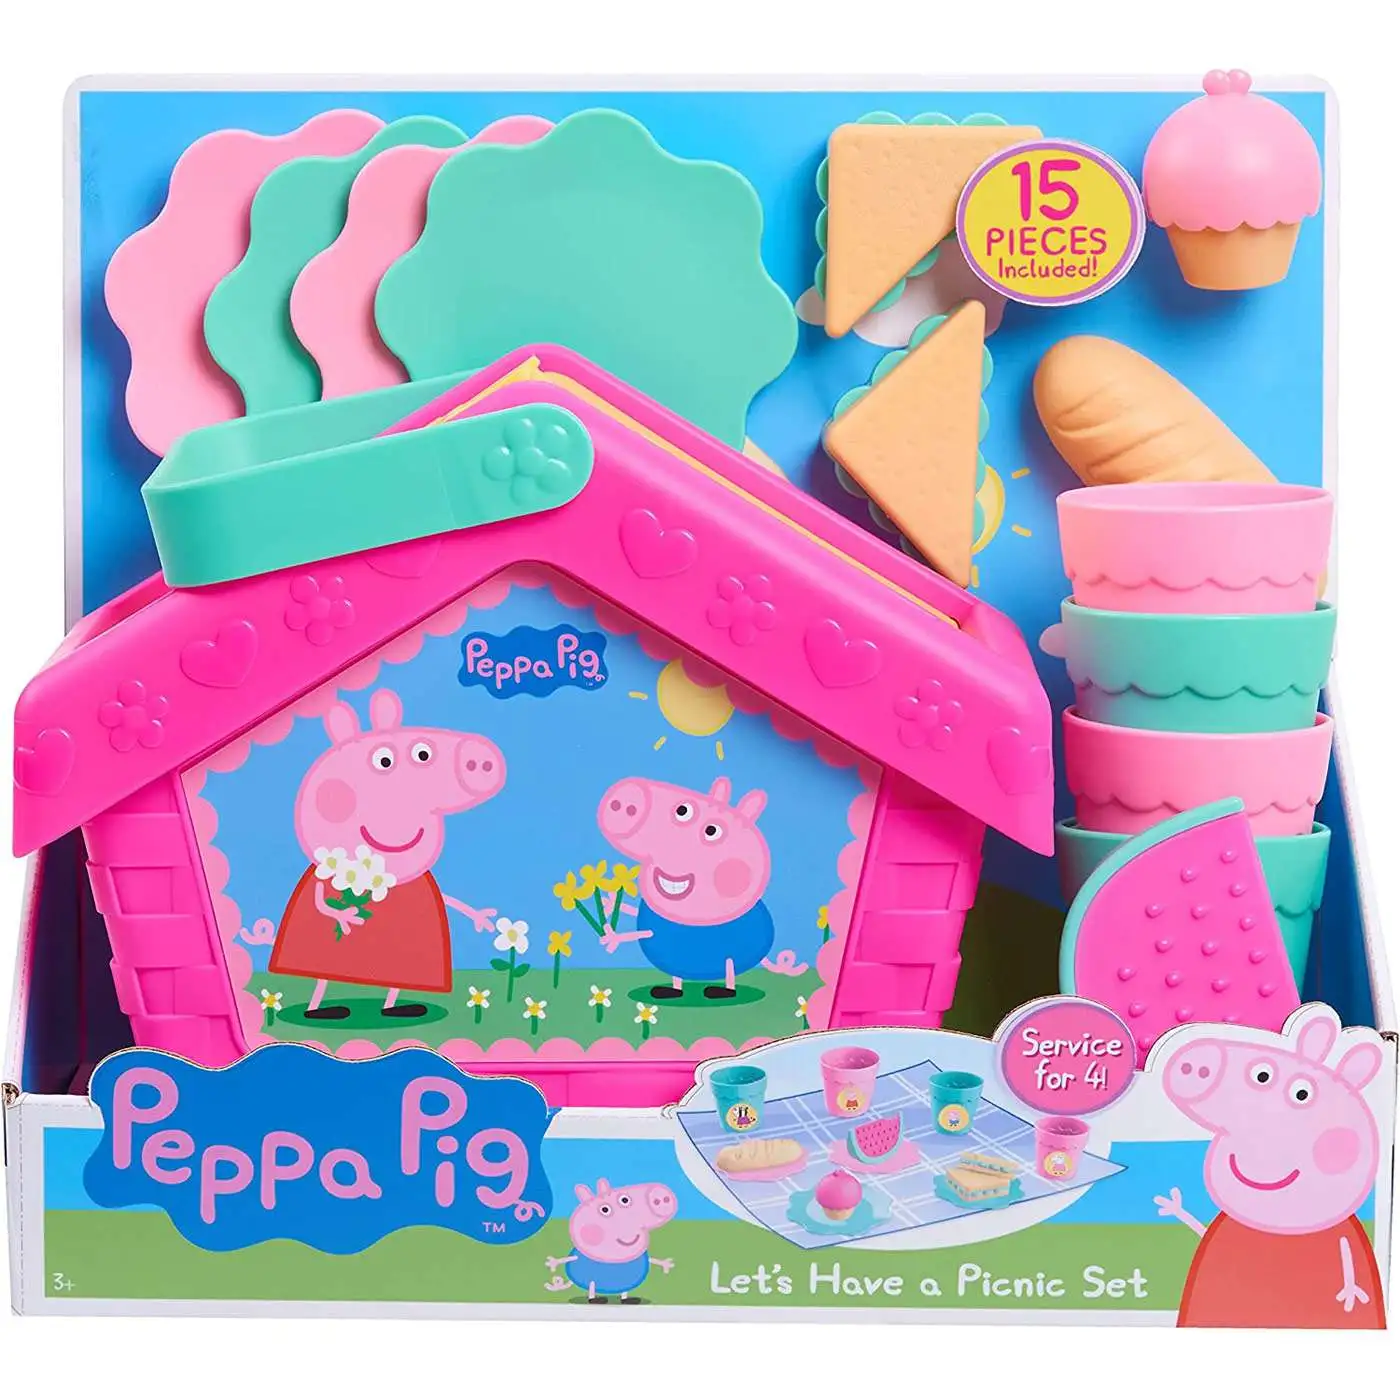 PEPPA PIG WORLD OF PEPPA CLIP PLUSH SINGLE LOOSE #2 GEORGE PIG 